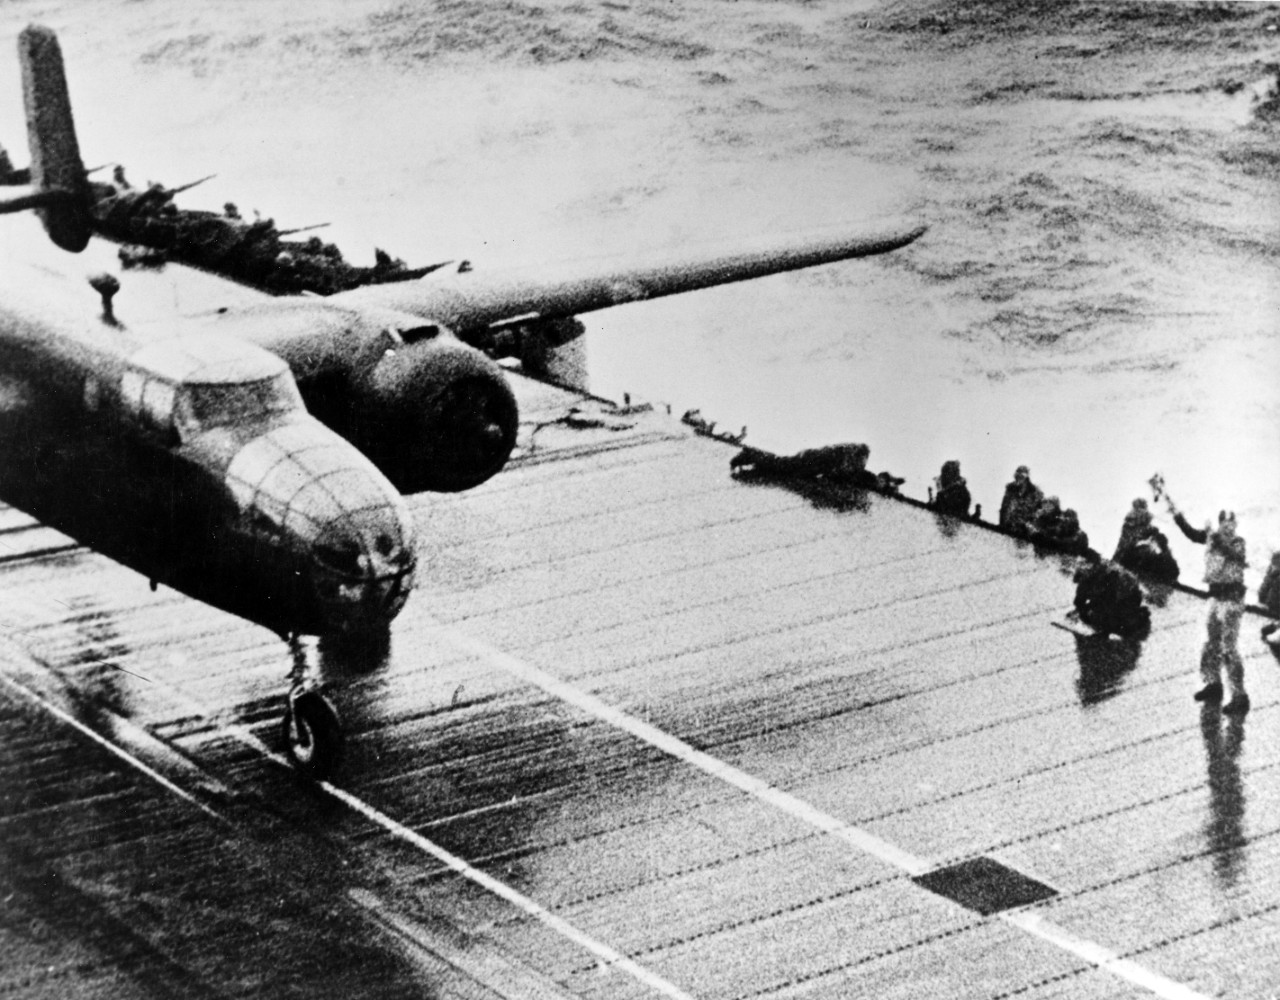 Photo #: 80-G-41194  Doolittle Raid on Japan, April 1942